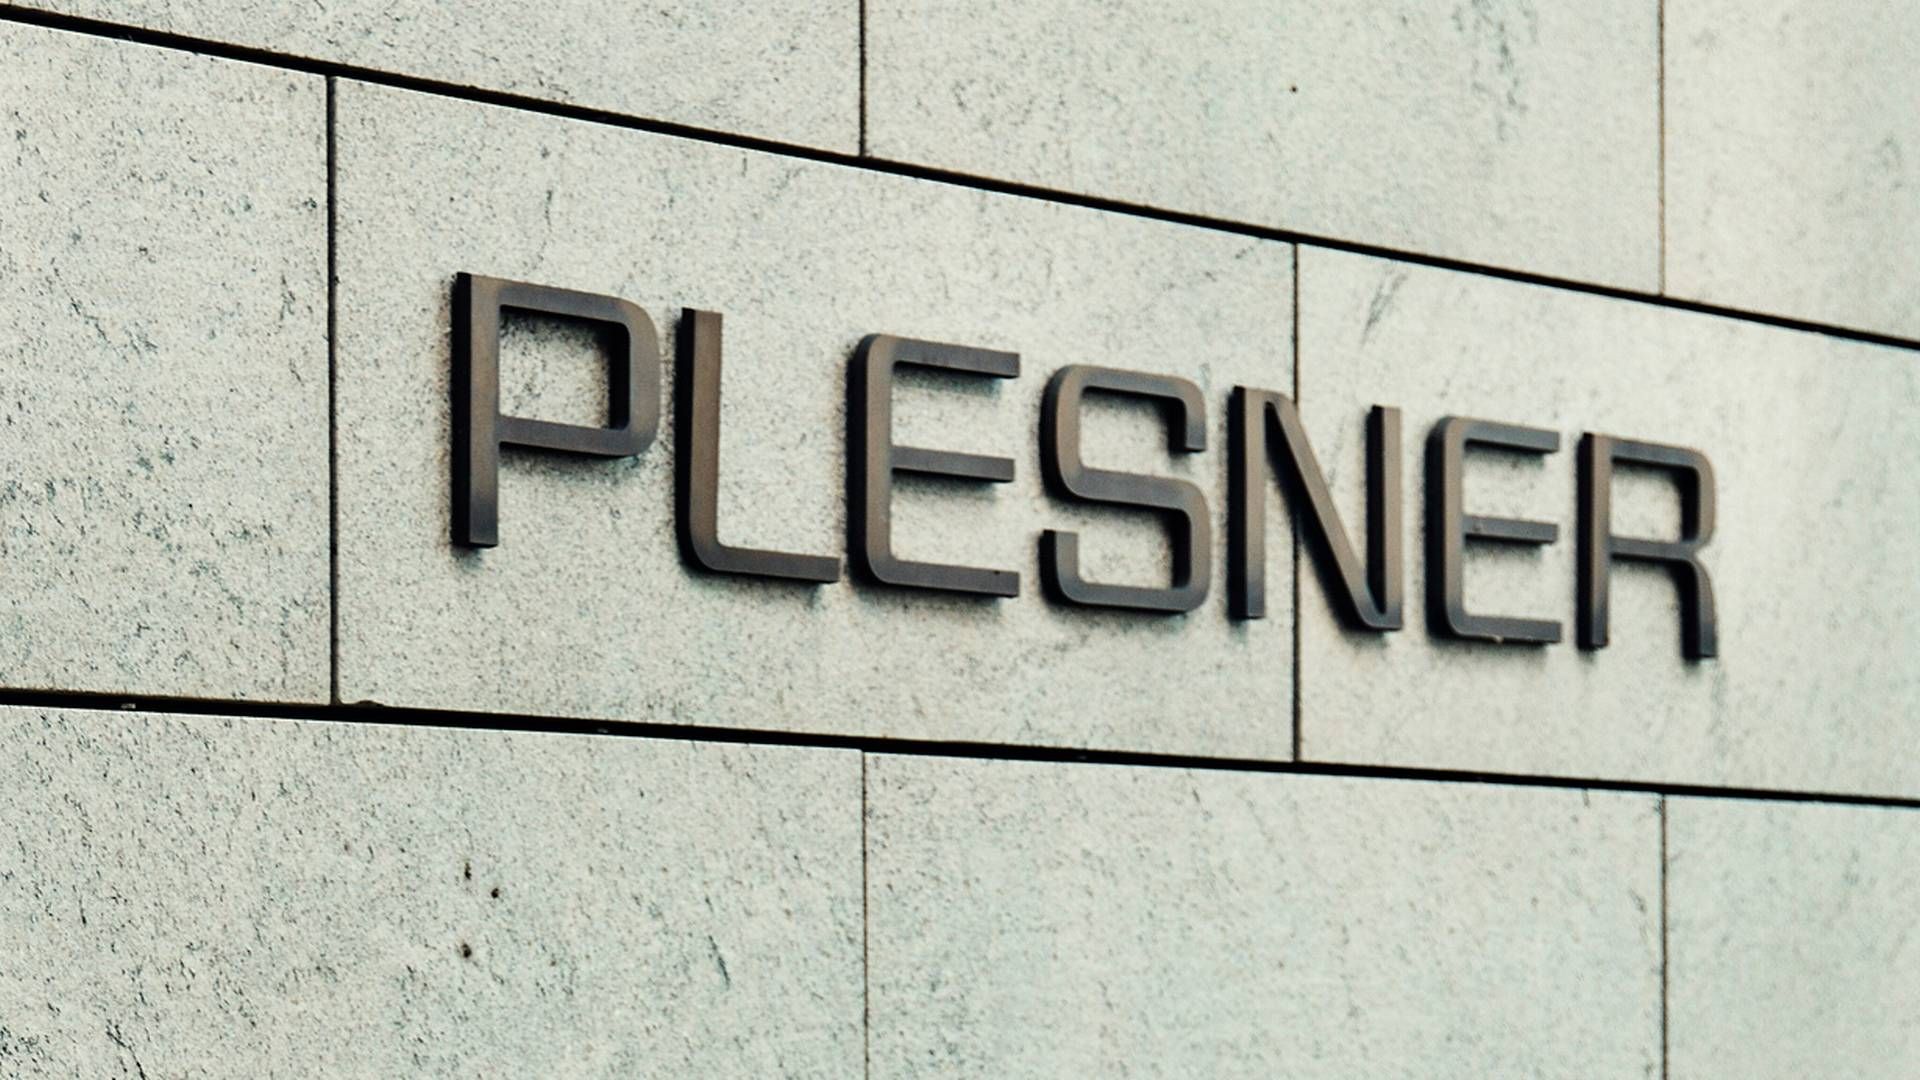 Plesner opererer med fire karrieretrin for advokater og rådgivere. | Foto: Jeppe Carlsen